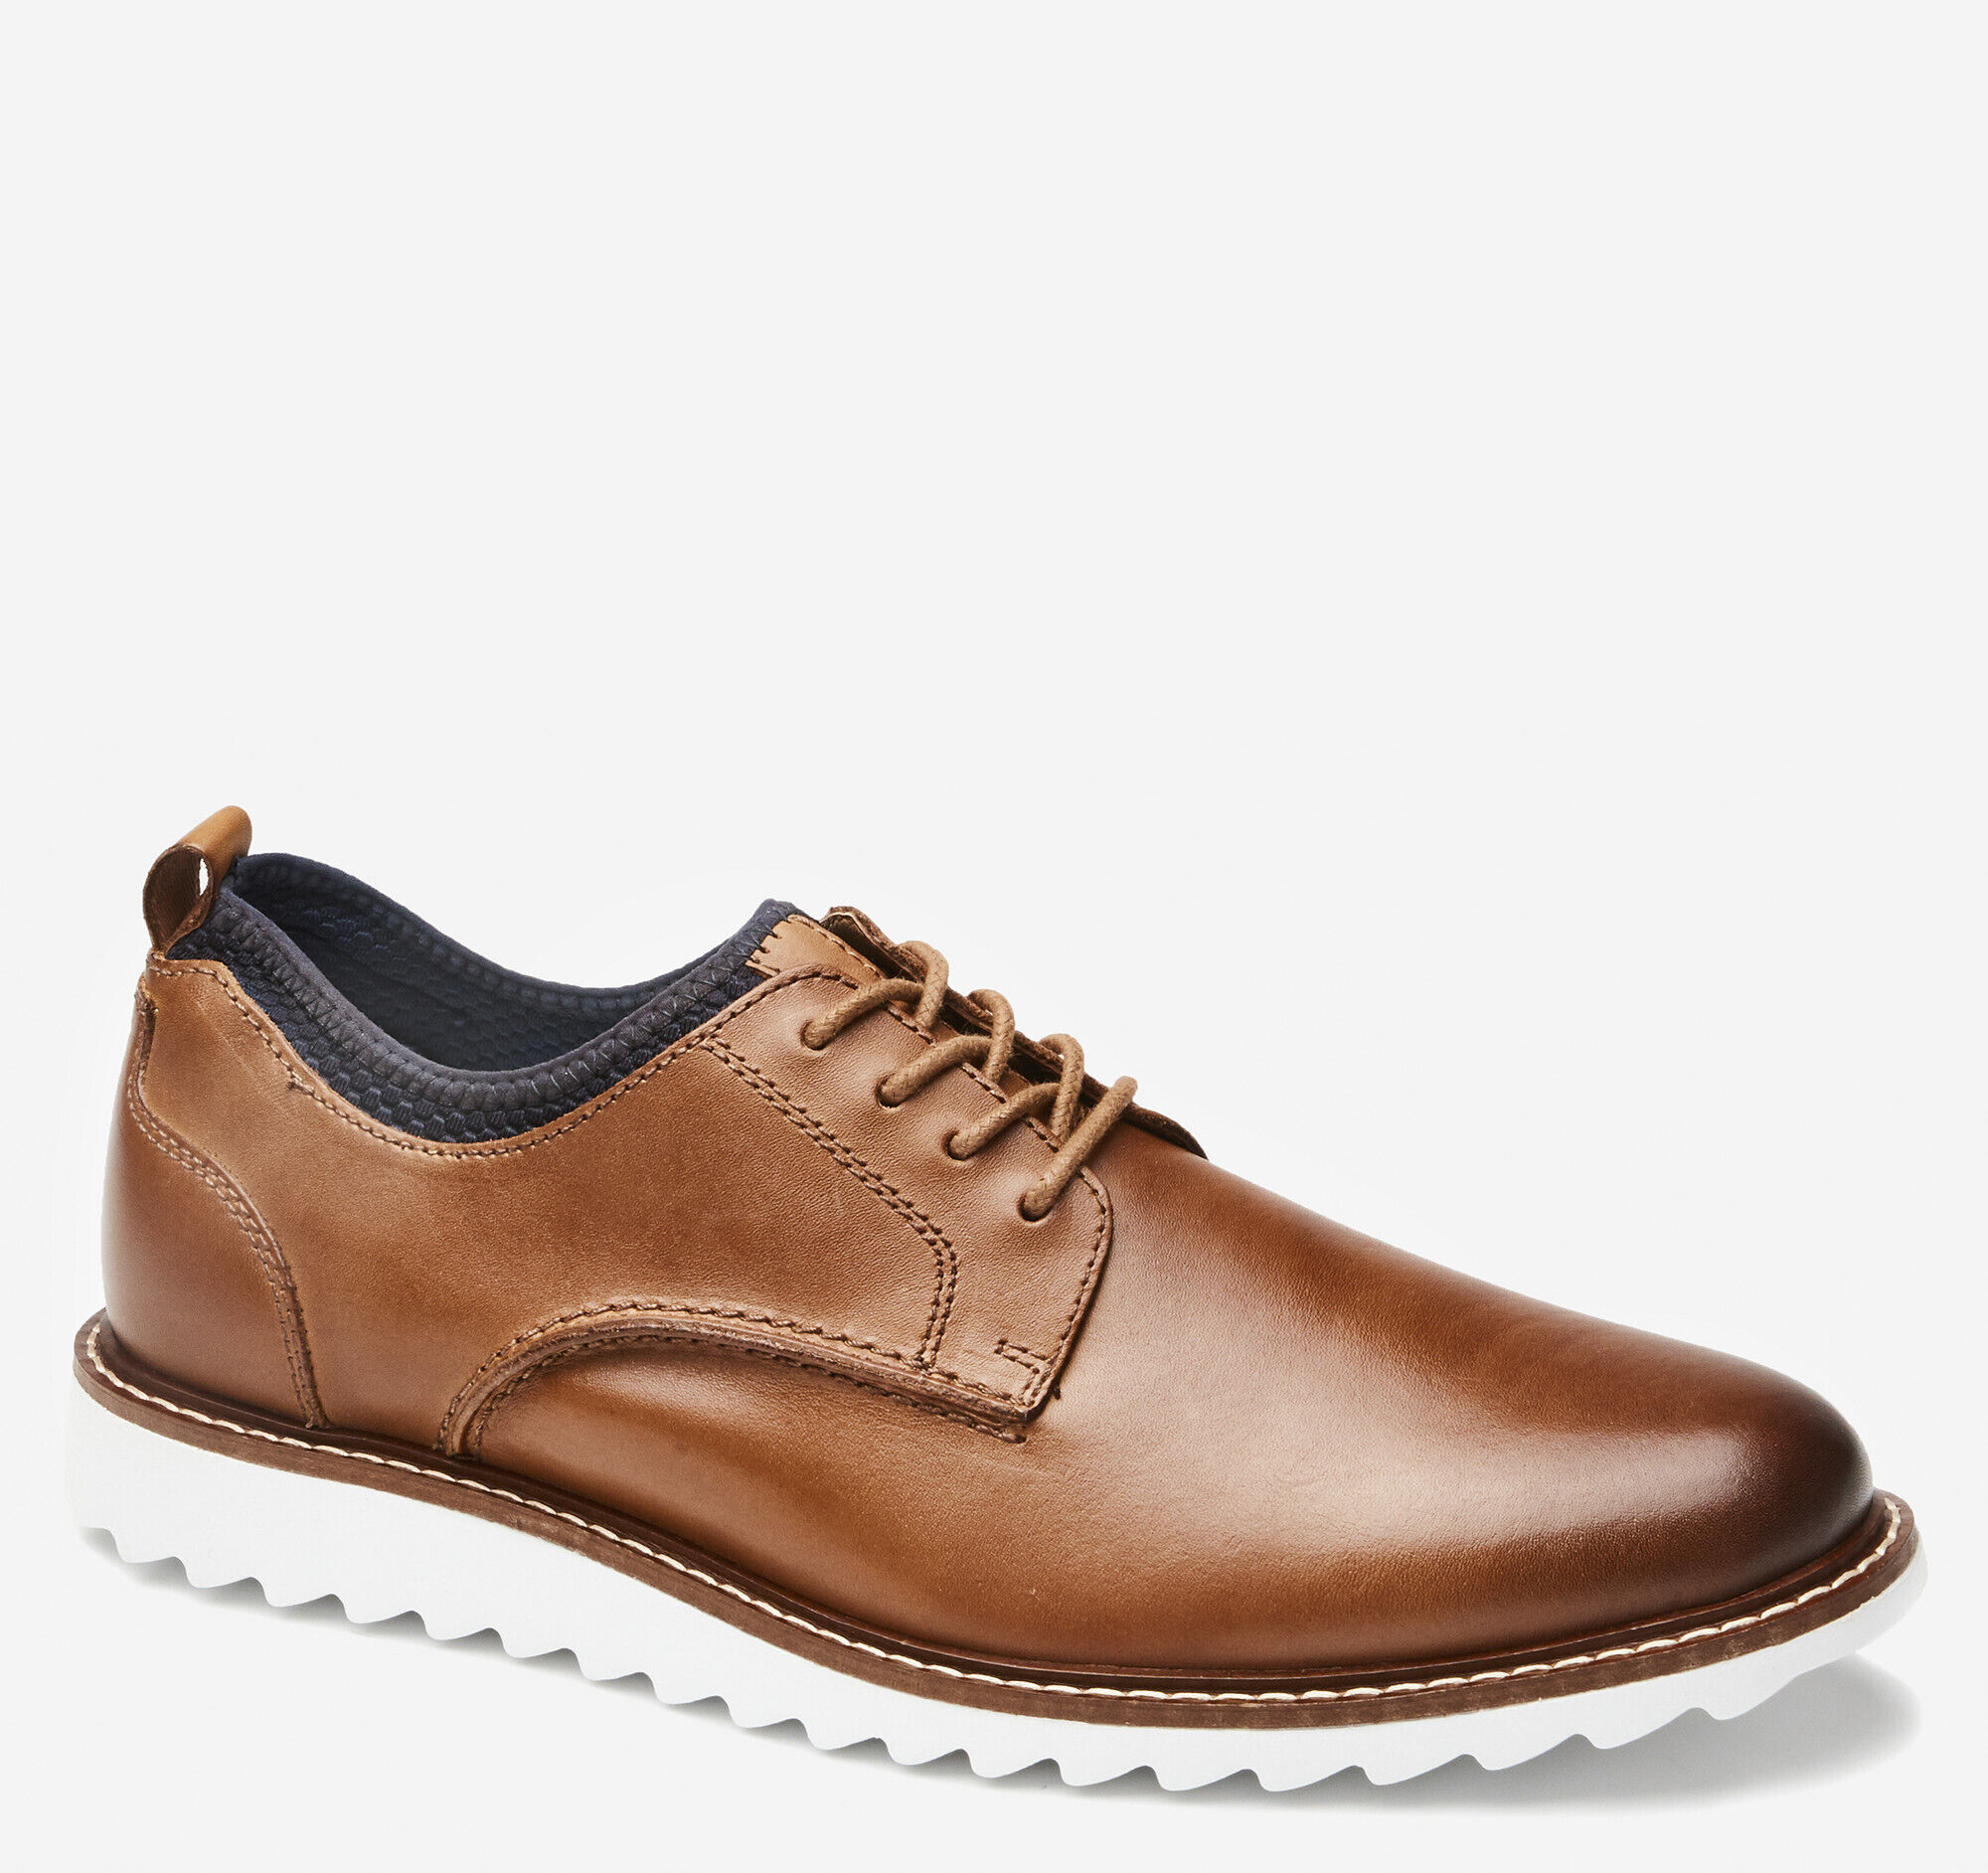 5910826 PF38 Men's Shoe Size 8.5 M Tan Leather Lace Ups Johnston & Murphy 